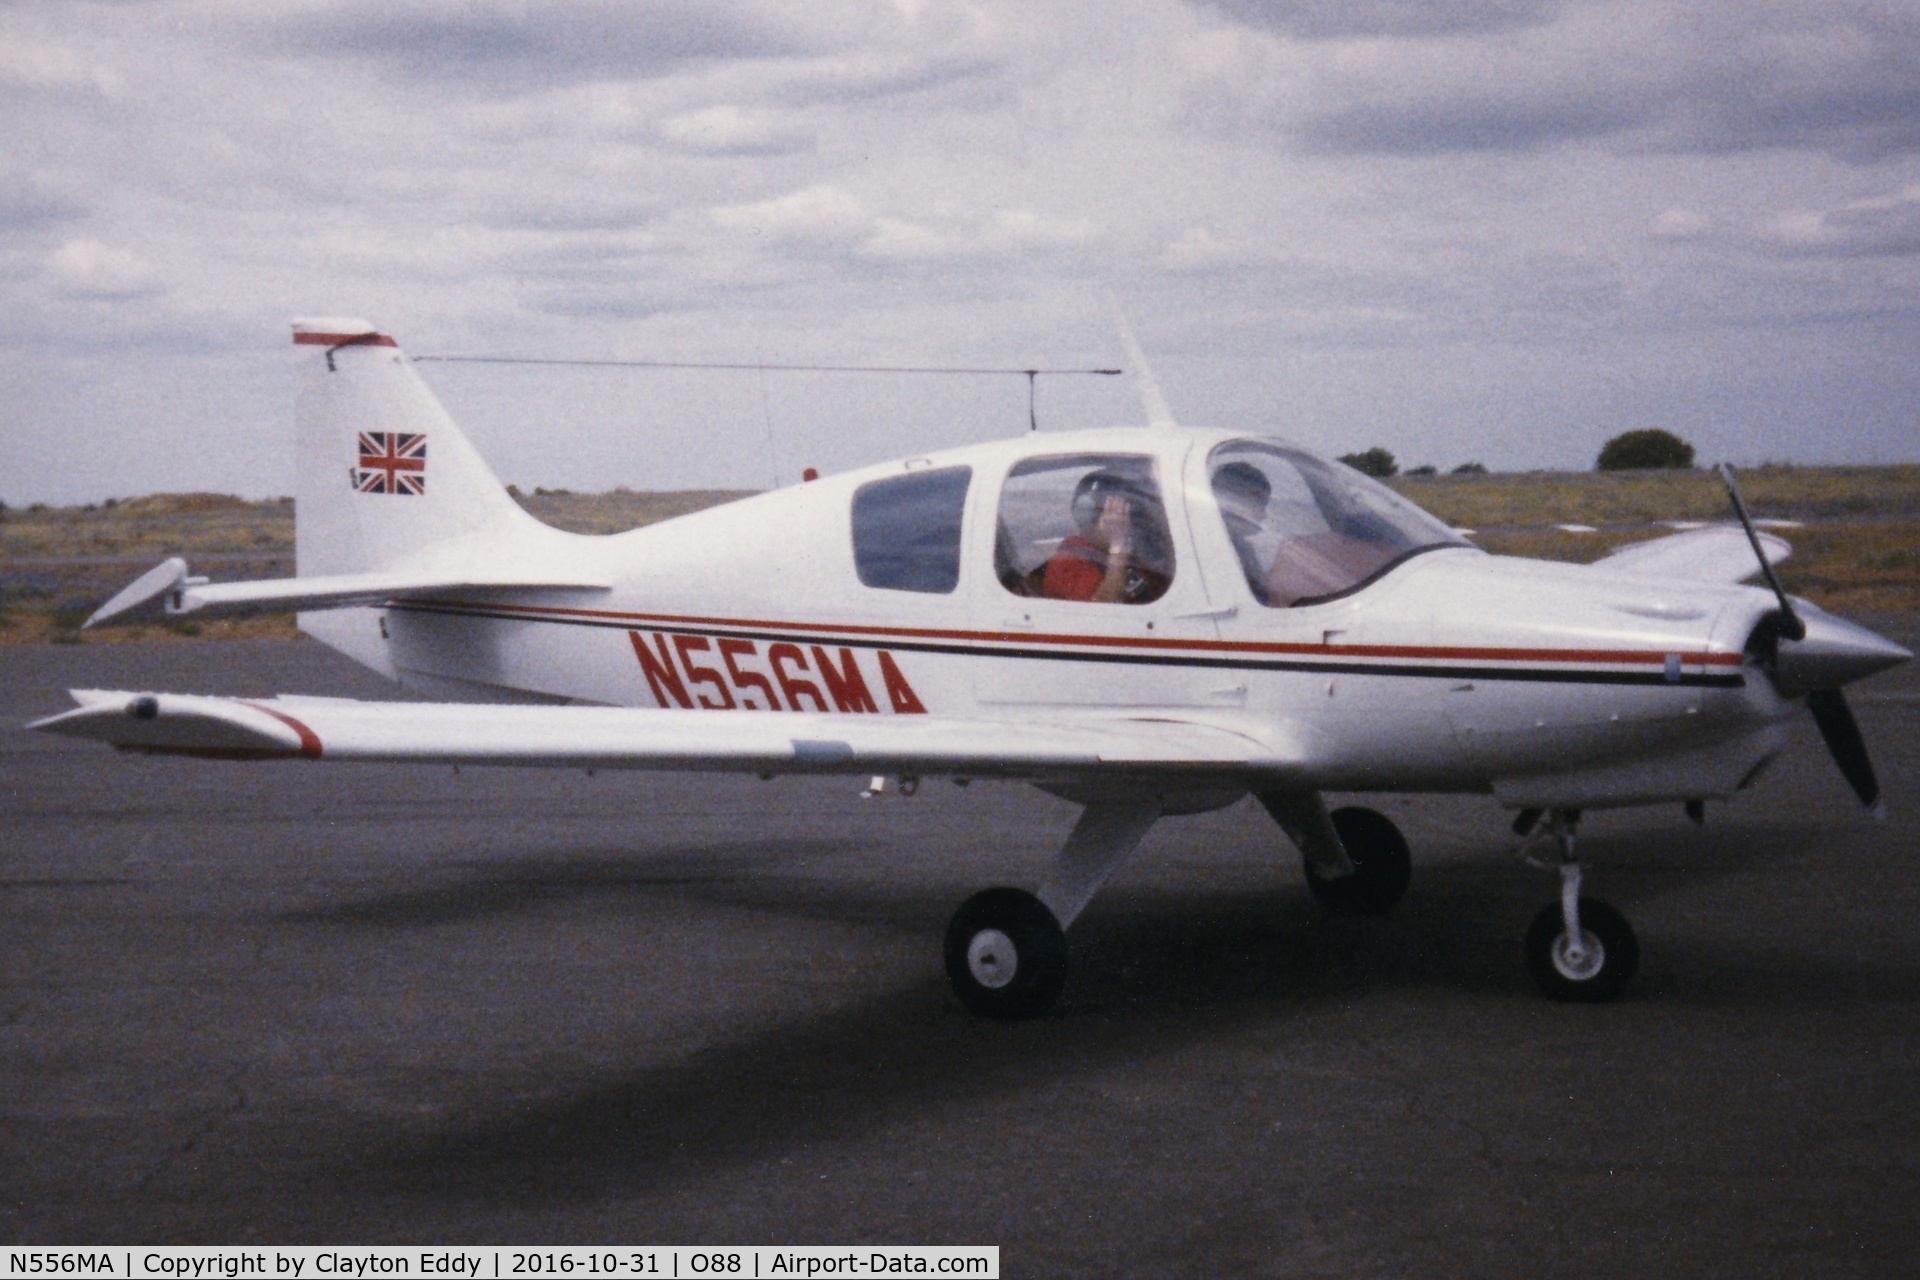 N556MA, 1968 Beagle B-121 Series 1 C/N B013, N556MA at the old Rio Vista Airport in California.